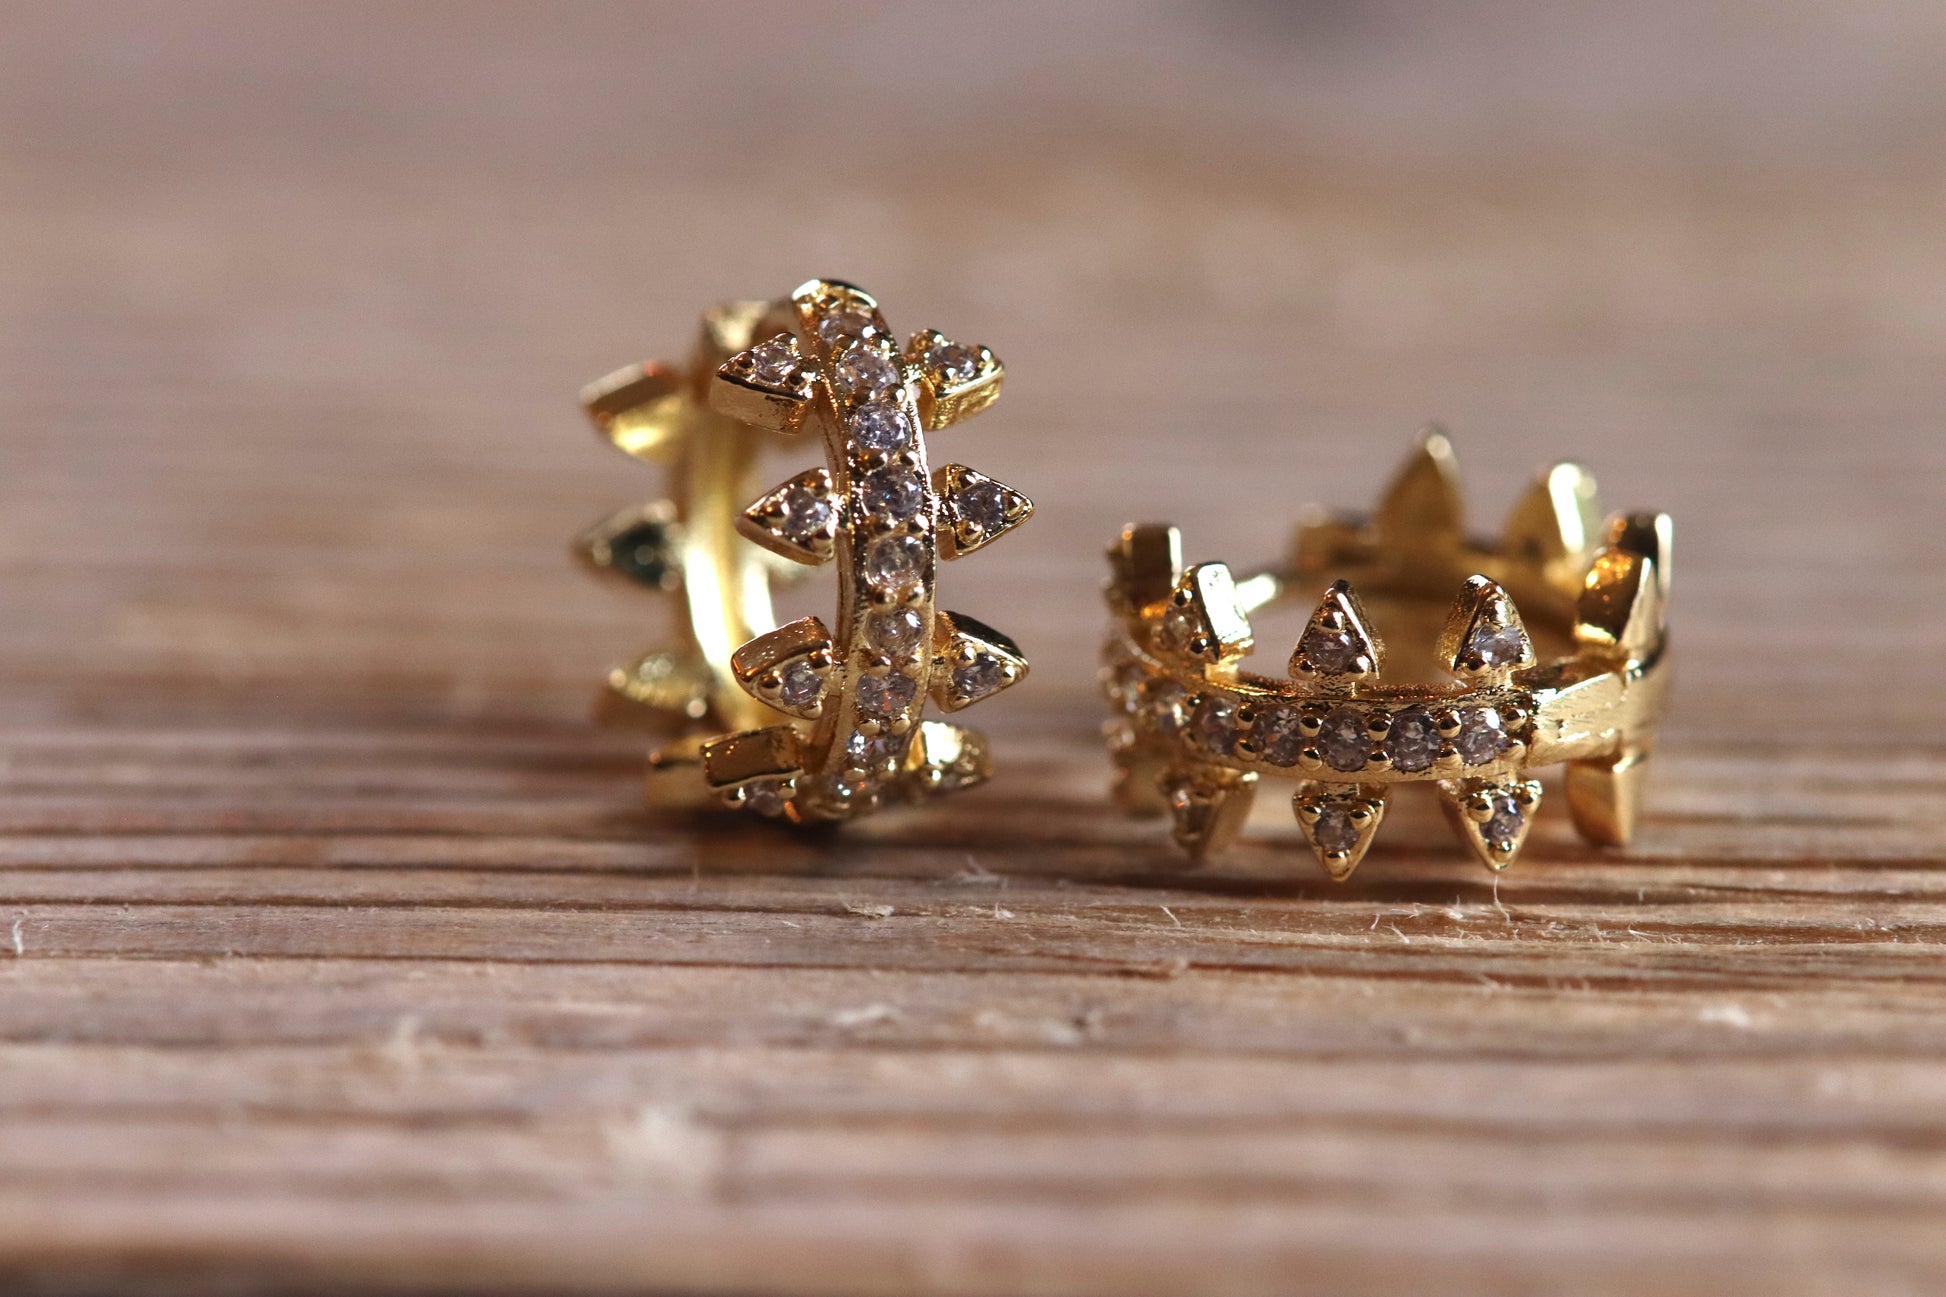 Brass Huggie Earrings With Cubic Zirconi & Spikes on wood. Small Hoop Earrings. 